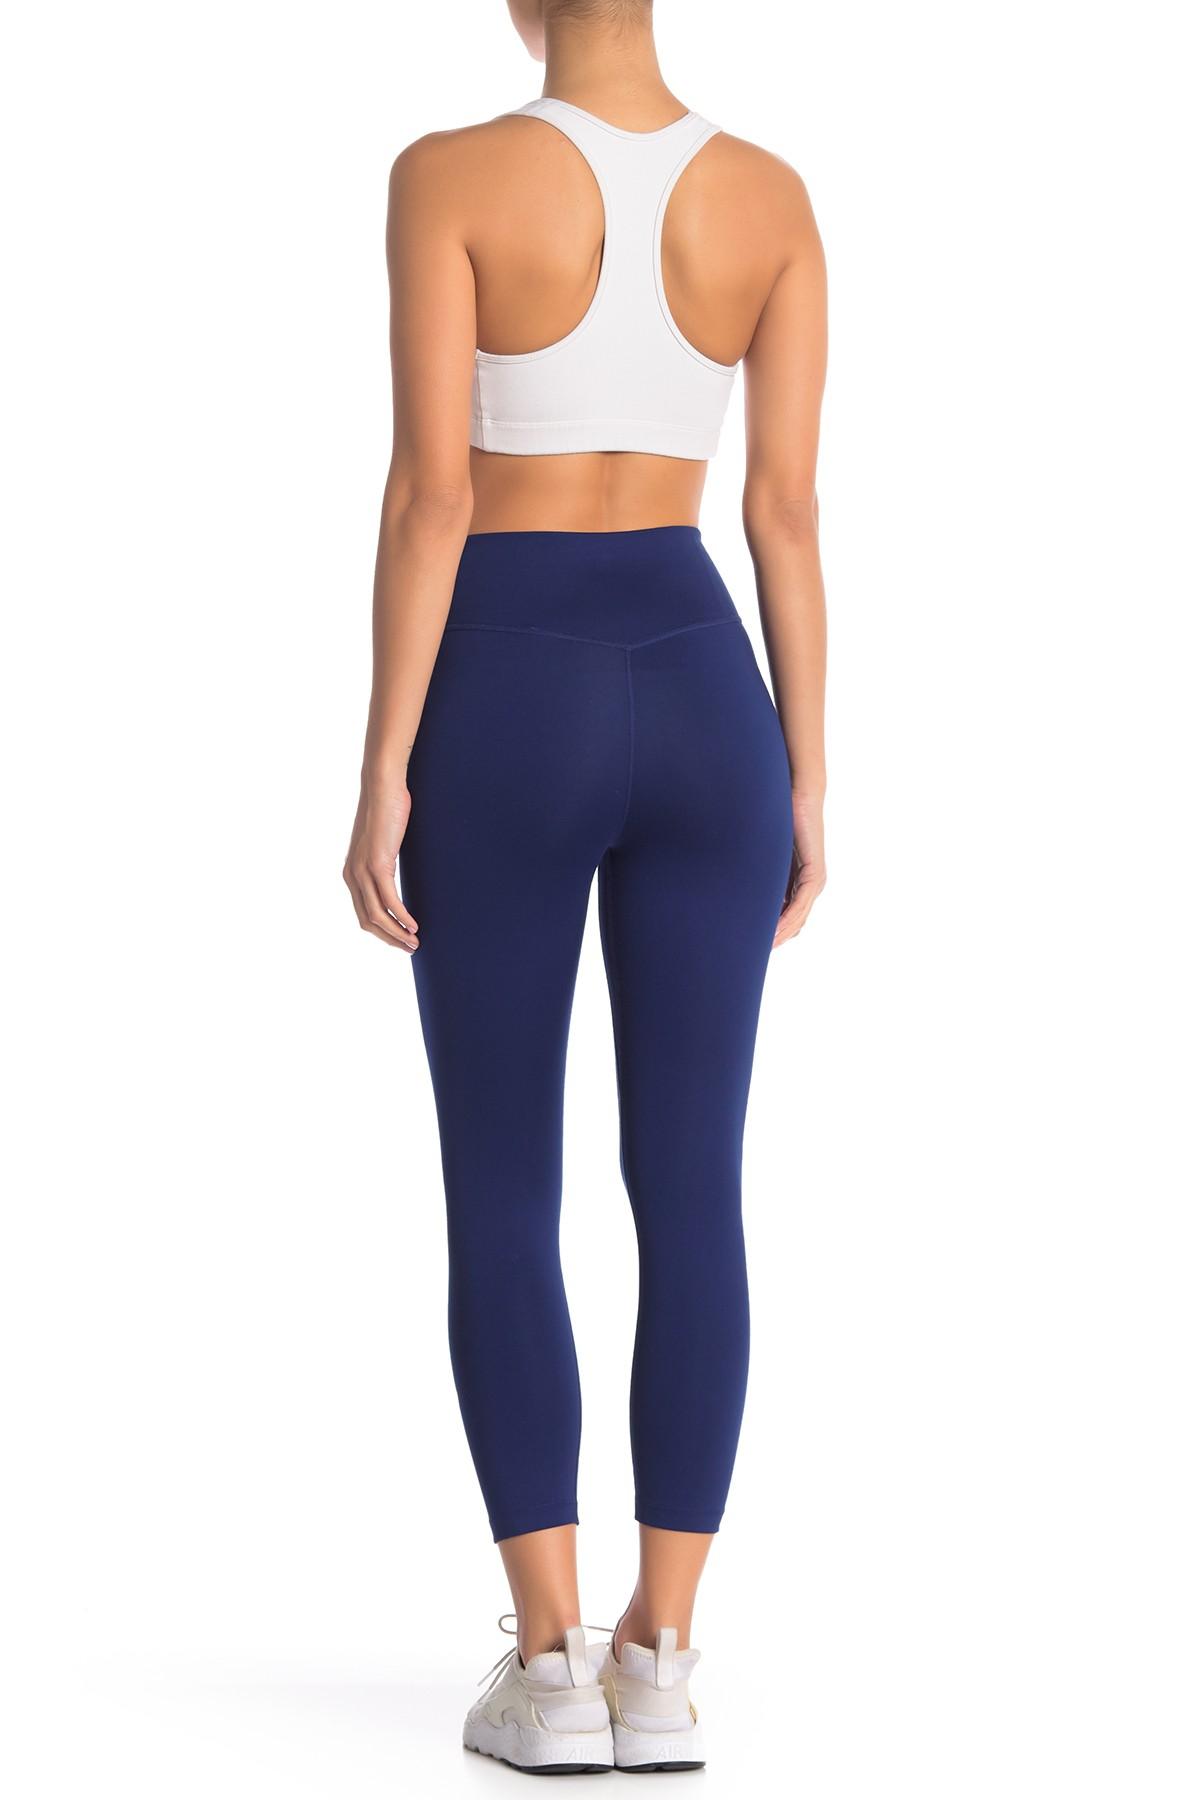 Buy > women's nike one crop leggings > in stock